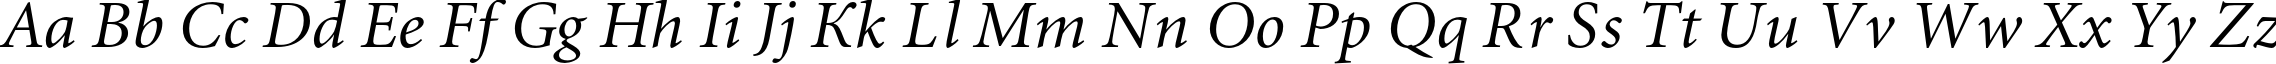 Пример написания английского алфавита шрифтом Miniature Italic